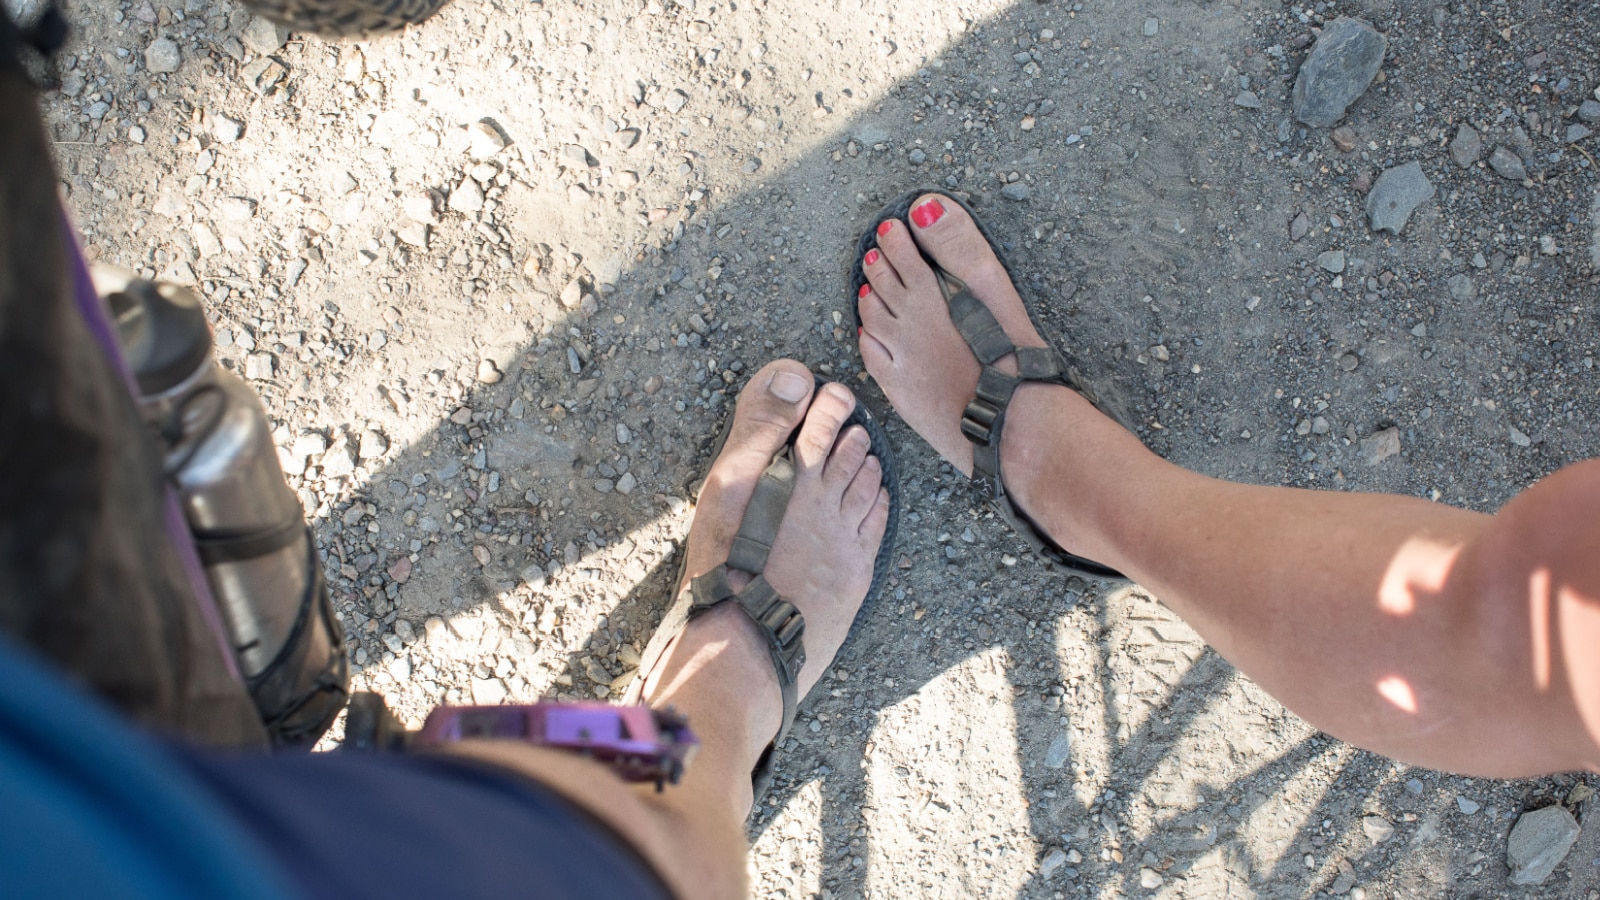 Malaga, Sierra Nevada / Spain - 12/10/2019: Bedrock sandals. His and hers.